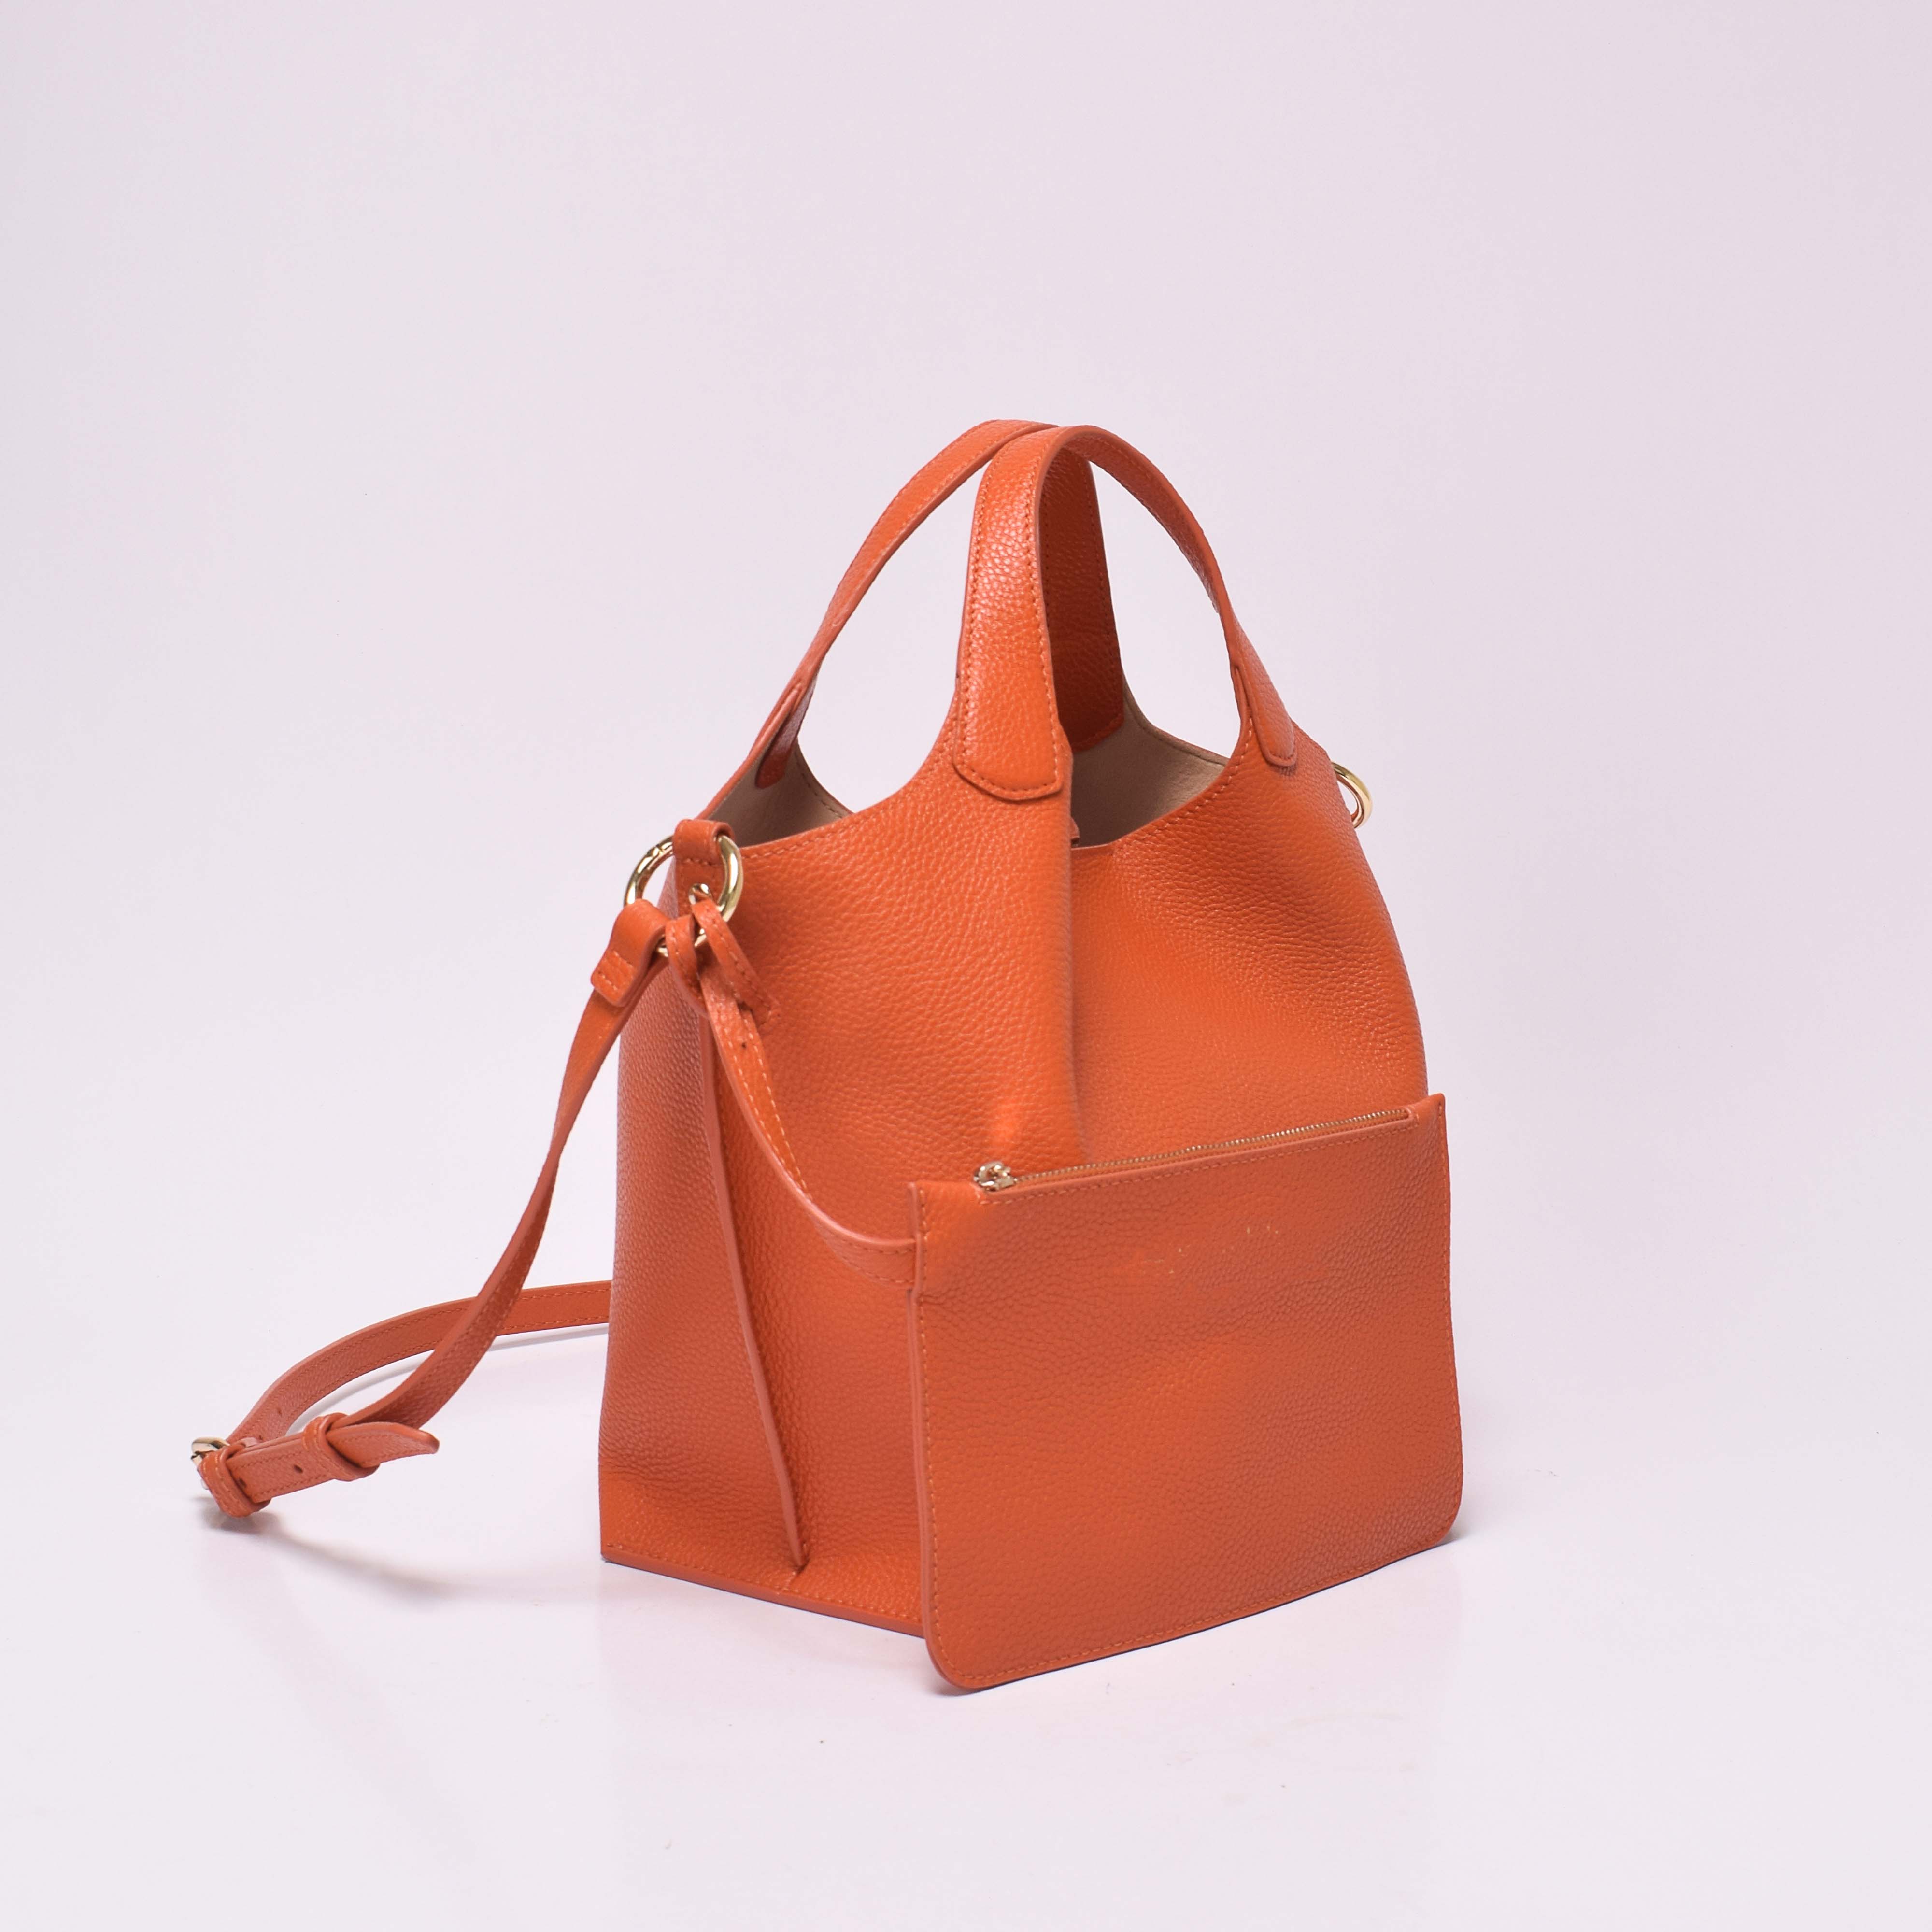 Sanlly bags trendy handbags online supplier for women-1